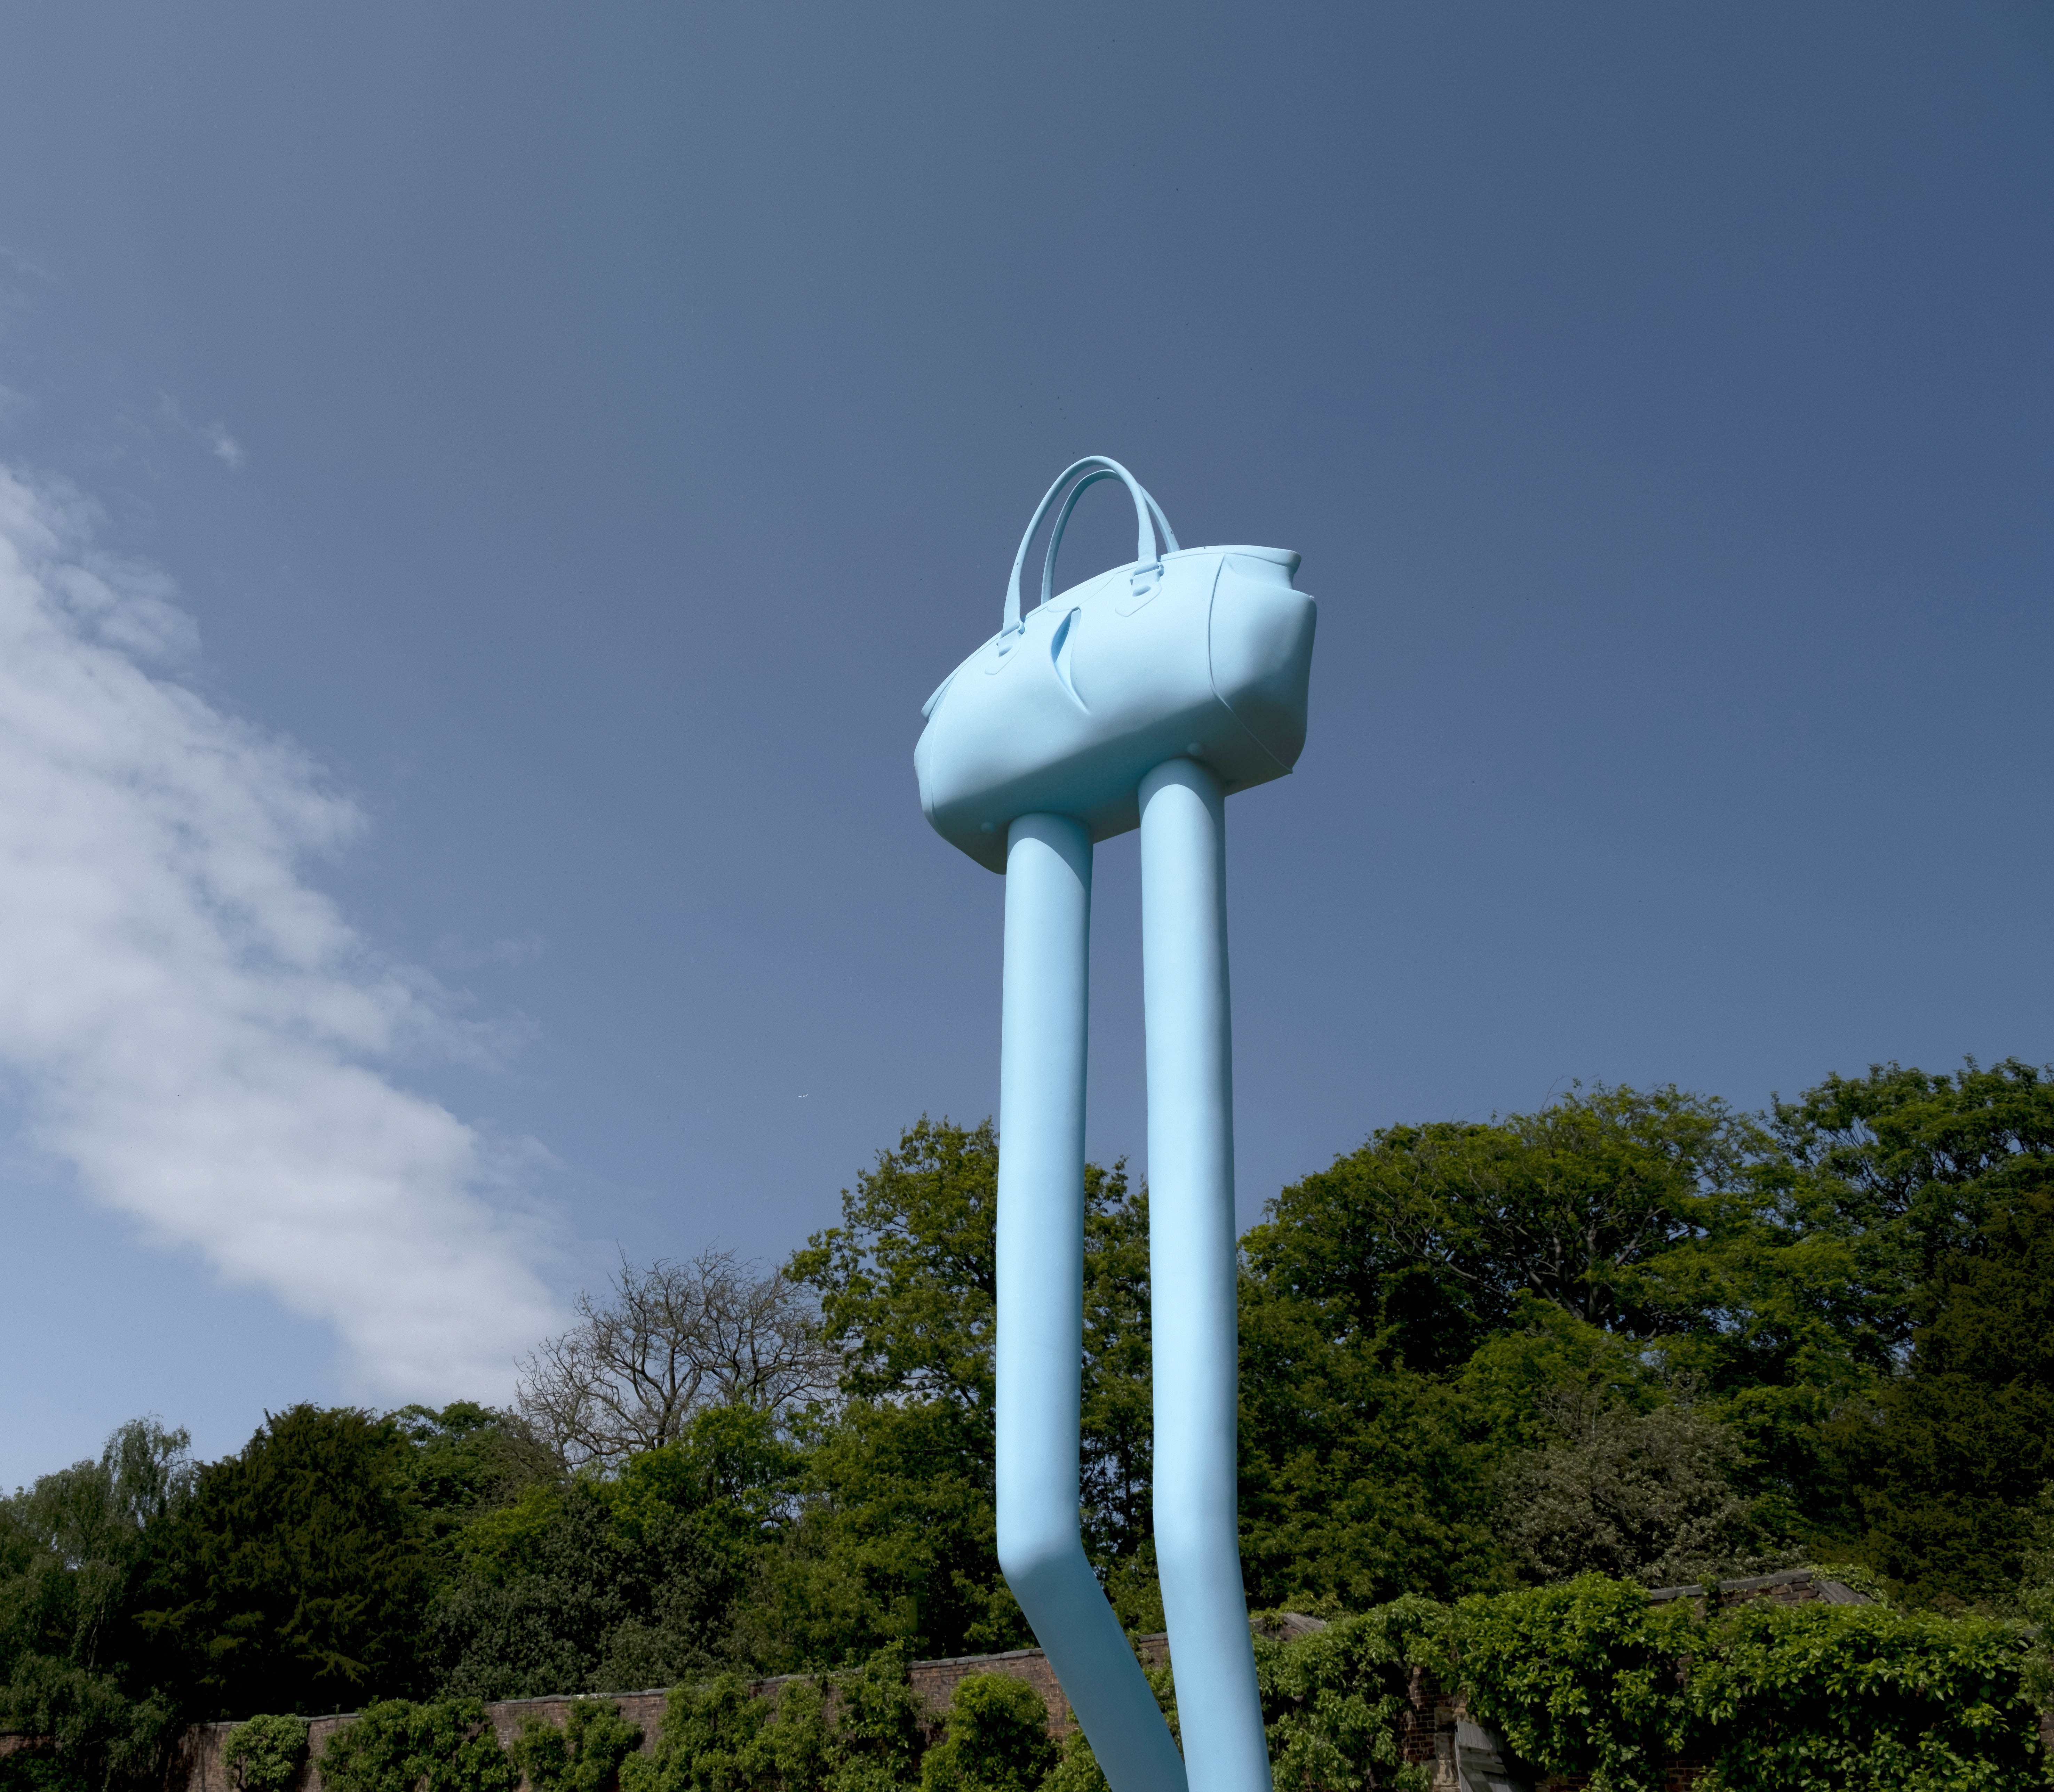 A blue handbag sculpture with long thin legs